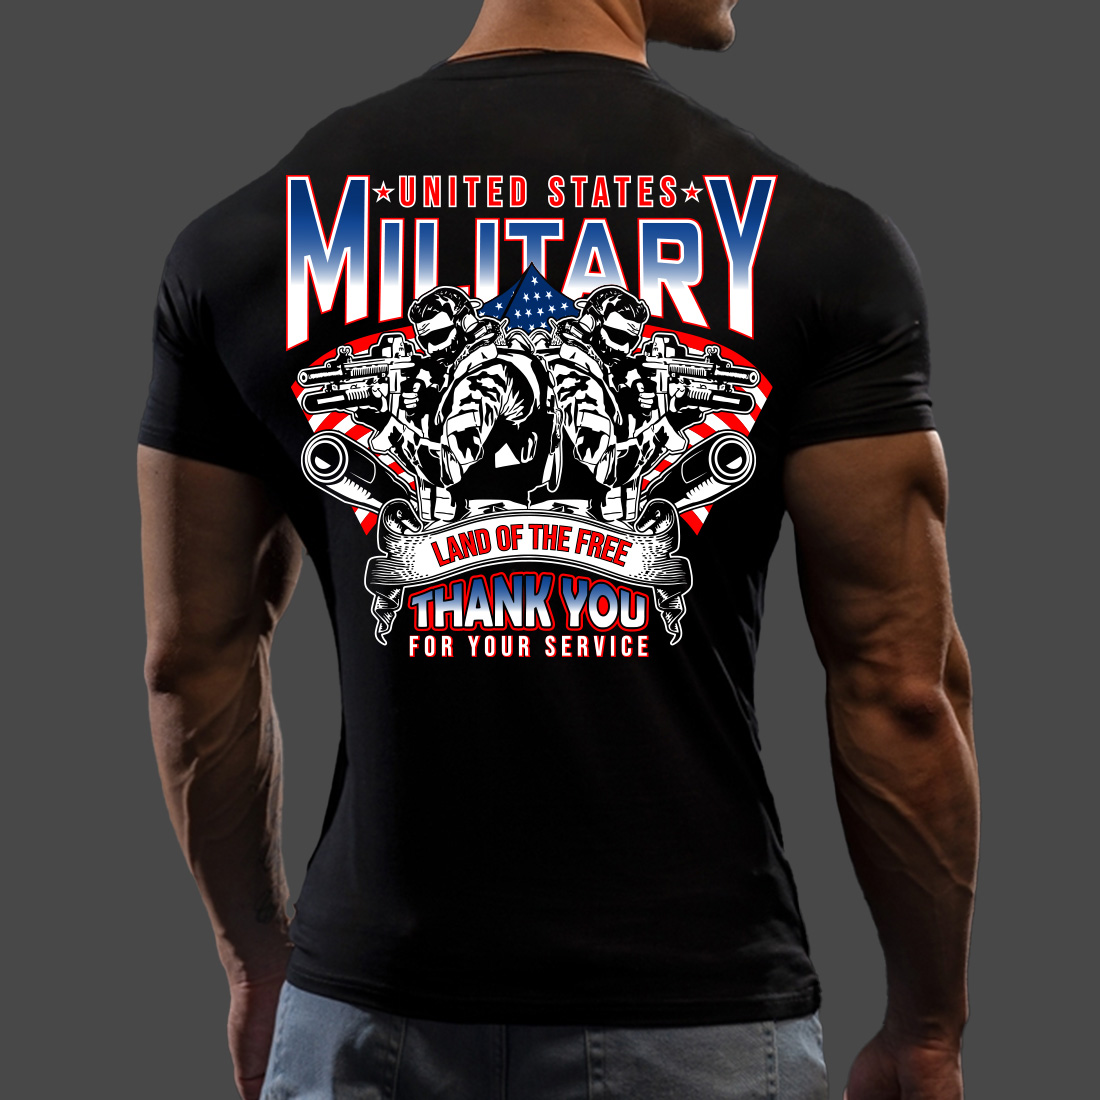 veteran day t shirt 8 102